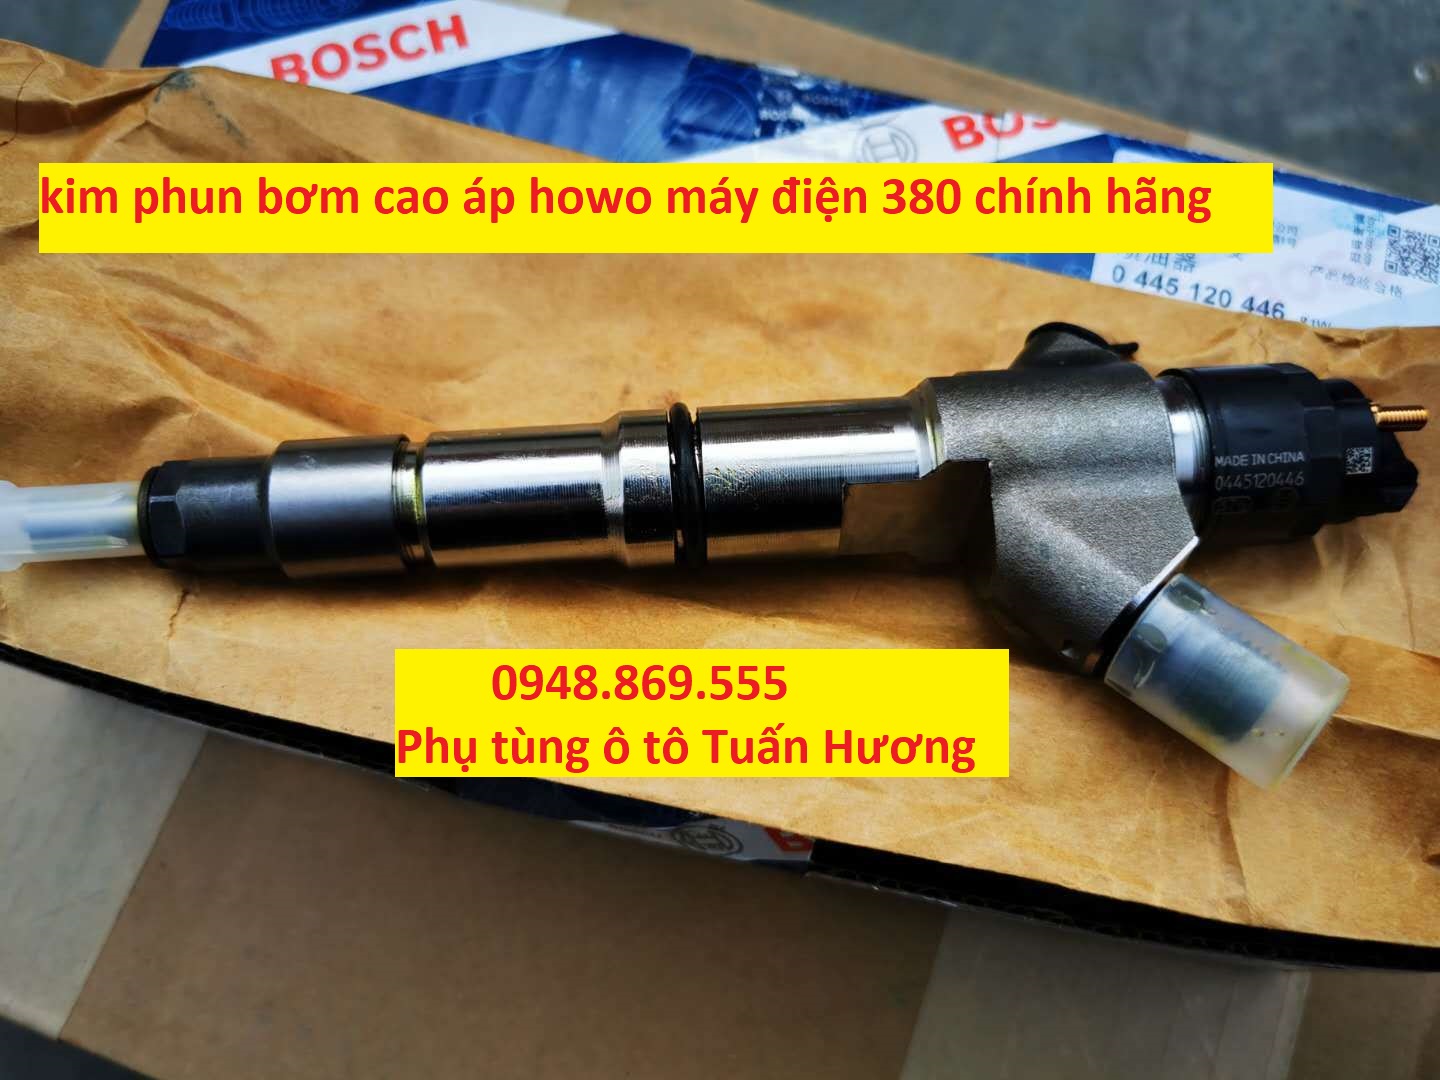 HOWO Diesel Engine D10 38 Fuel Injector VG1034080002 Bosch Injector 0445120357 kim phun howo may dien